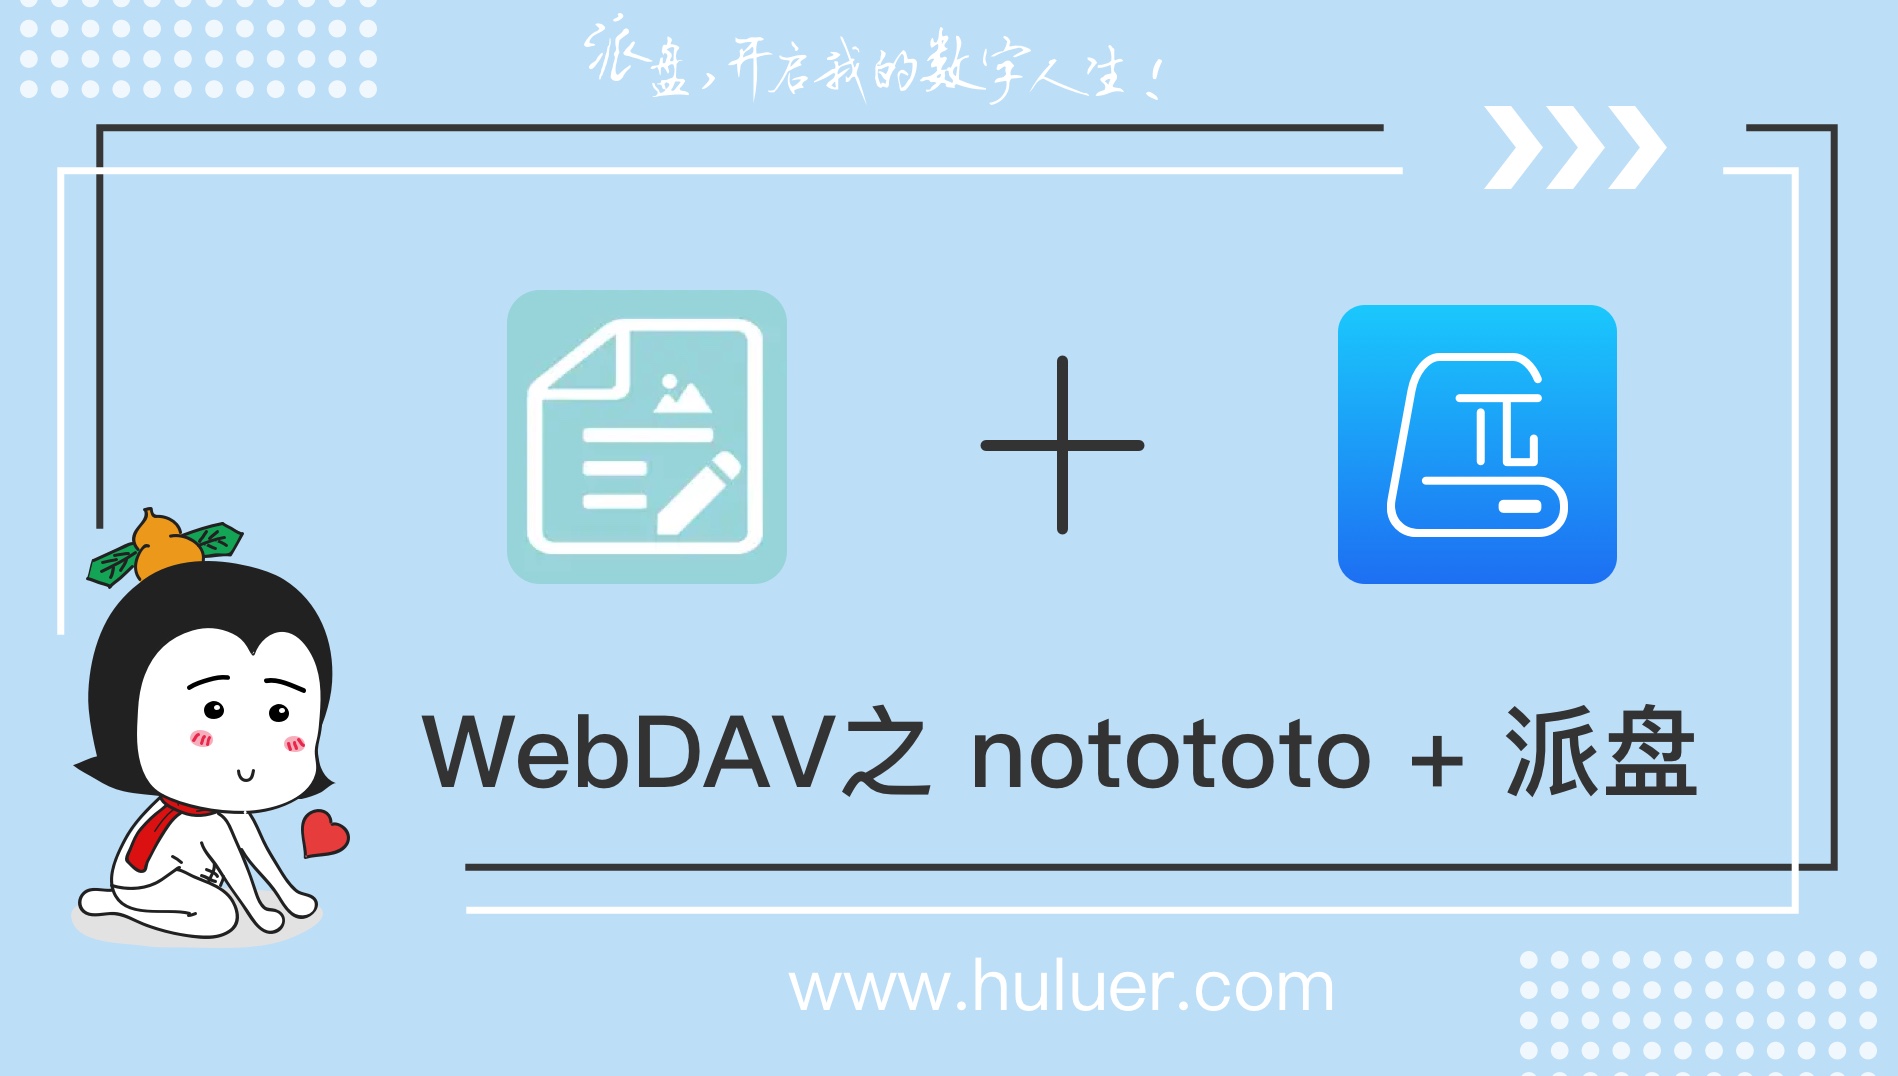 WebDAV之π-Disk派盘 + notototo